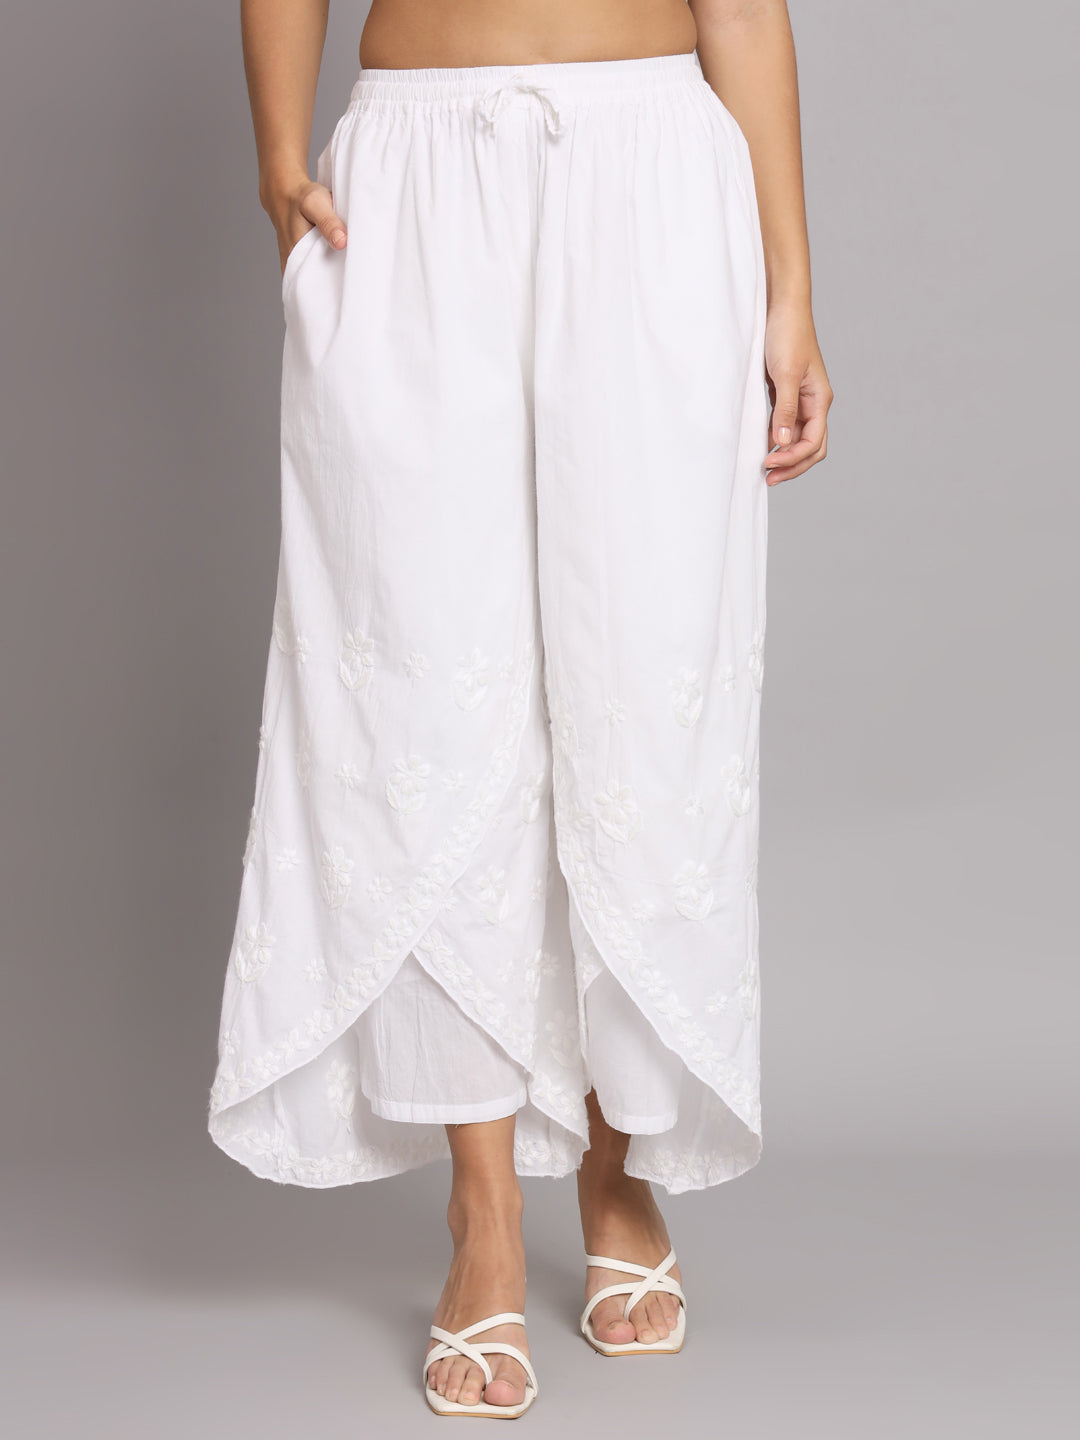 White Womens Palazzo Cotton Trouser Pants, Indian Chikankari Cotton Pant,  Sharara, Skirt Style Boho Hippie Retro - Etsy | Women trousers design,  Womens pants design, Stylish dress designs